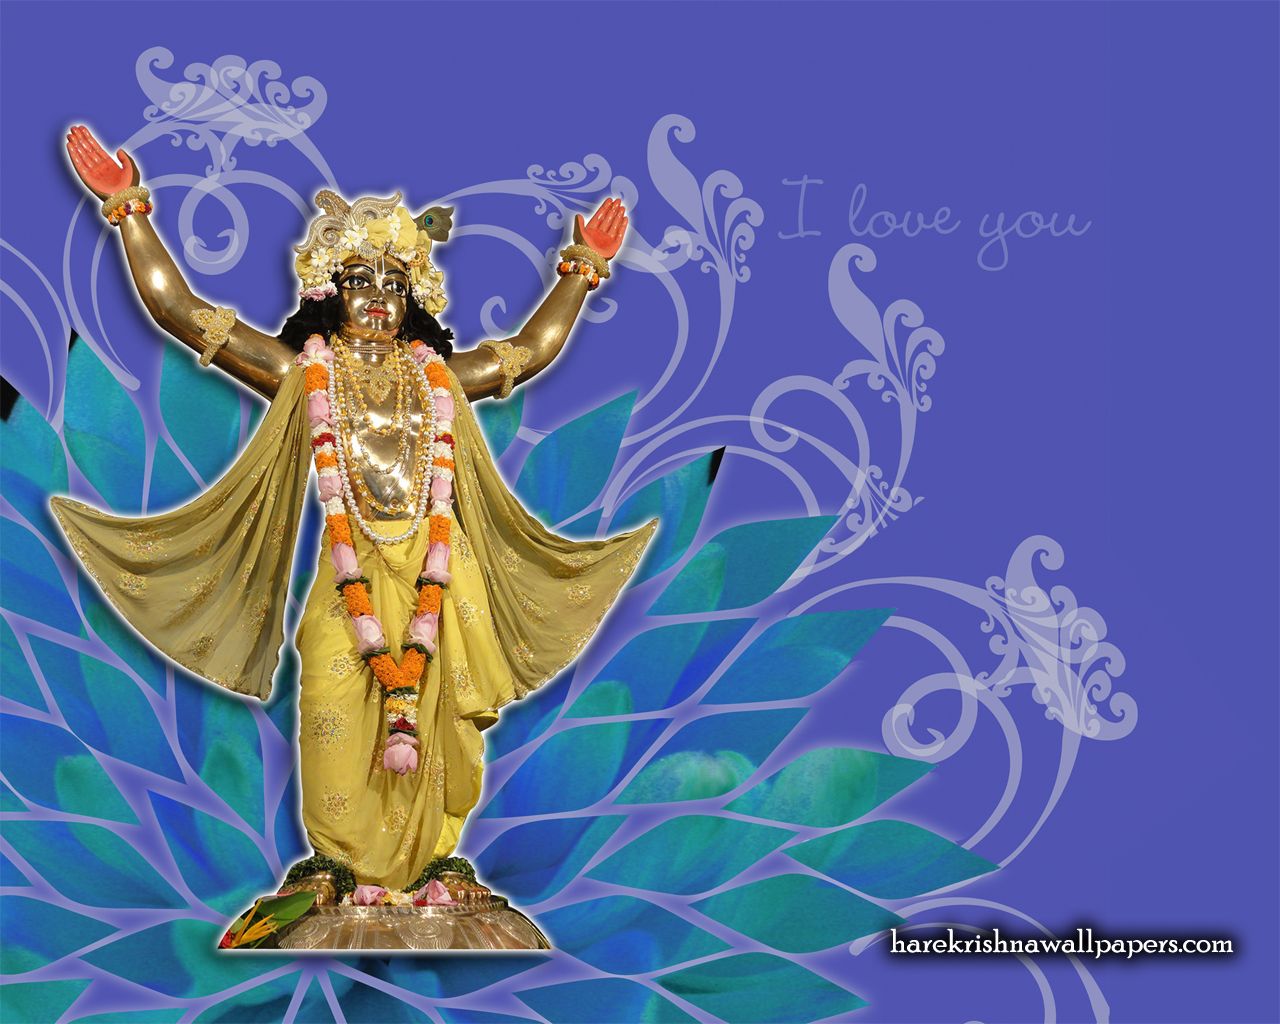 Chaitanya Mahaprabhu Wallpaper (004) Size 1280×1024 Download. Hare Krishna Wallpaper